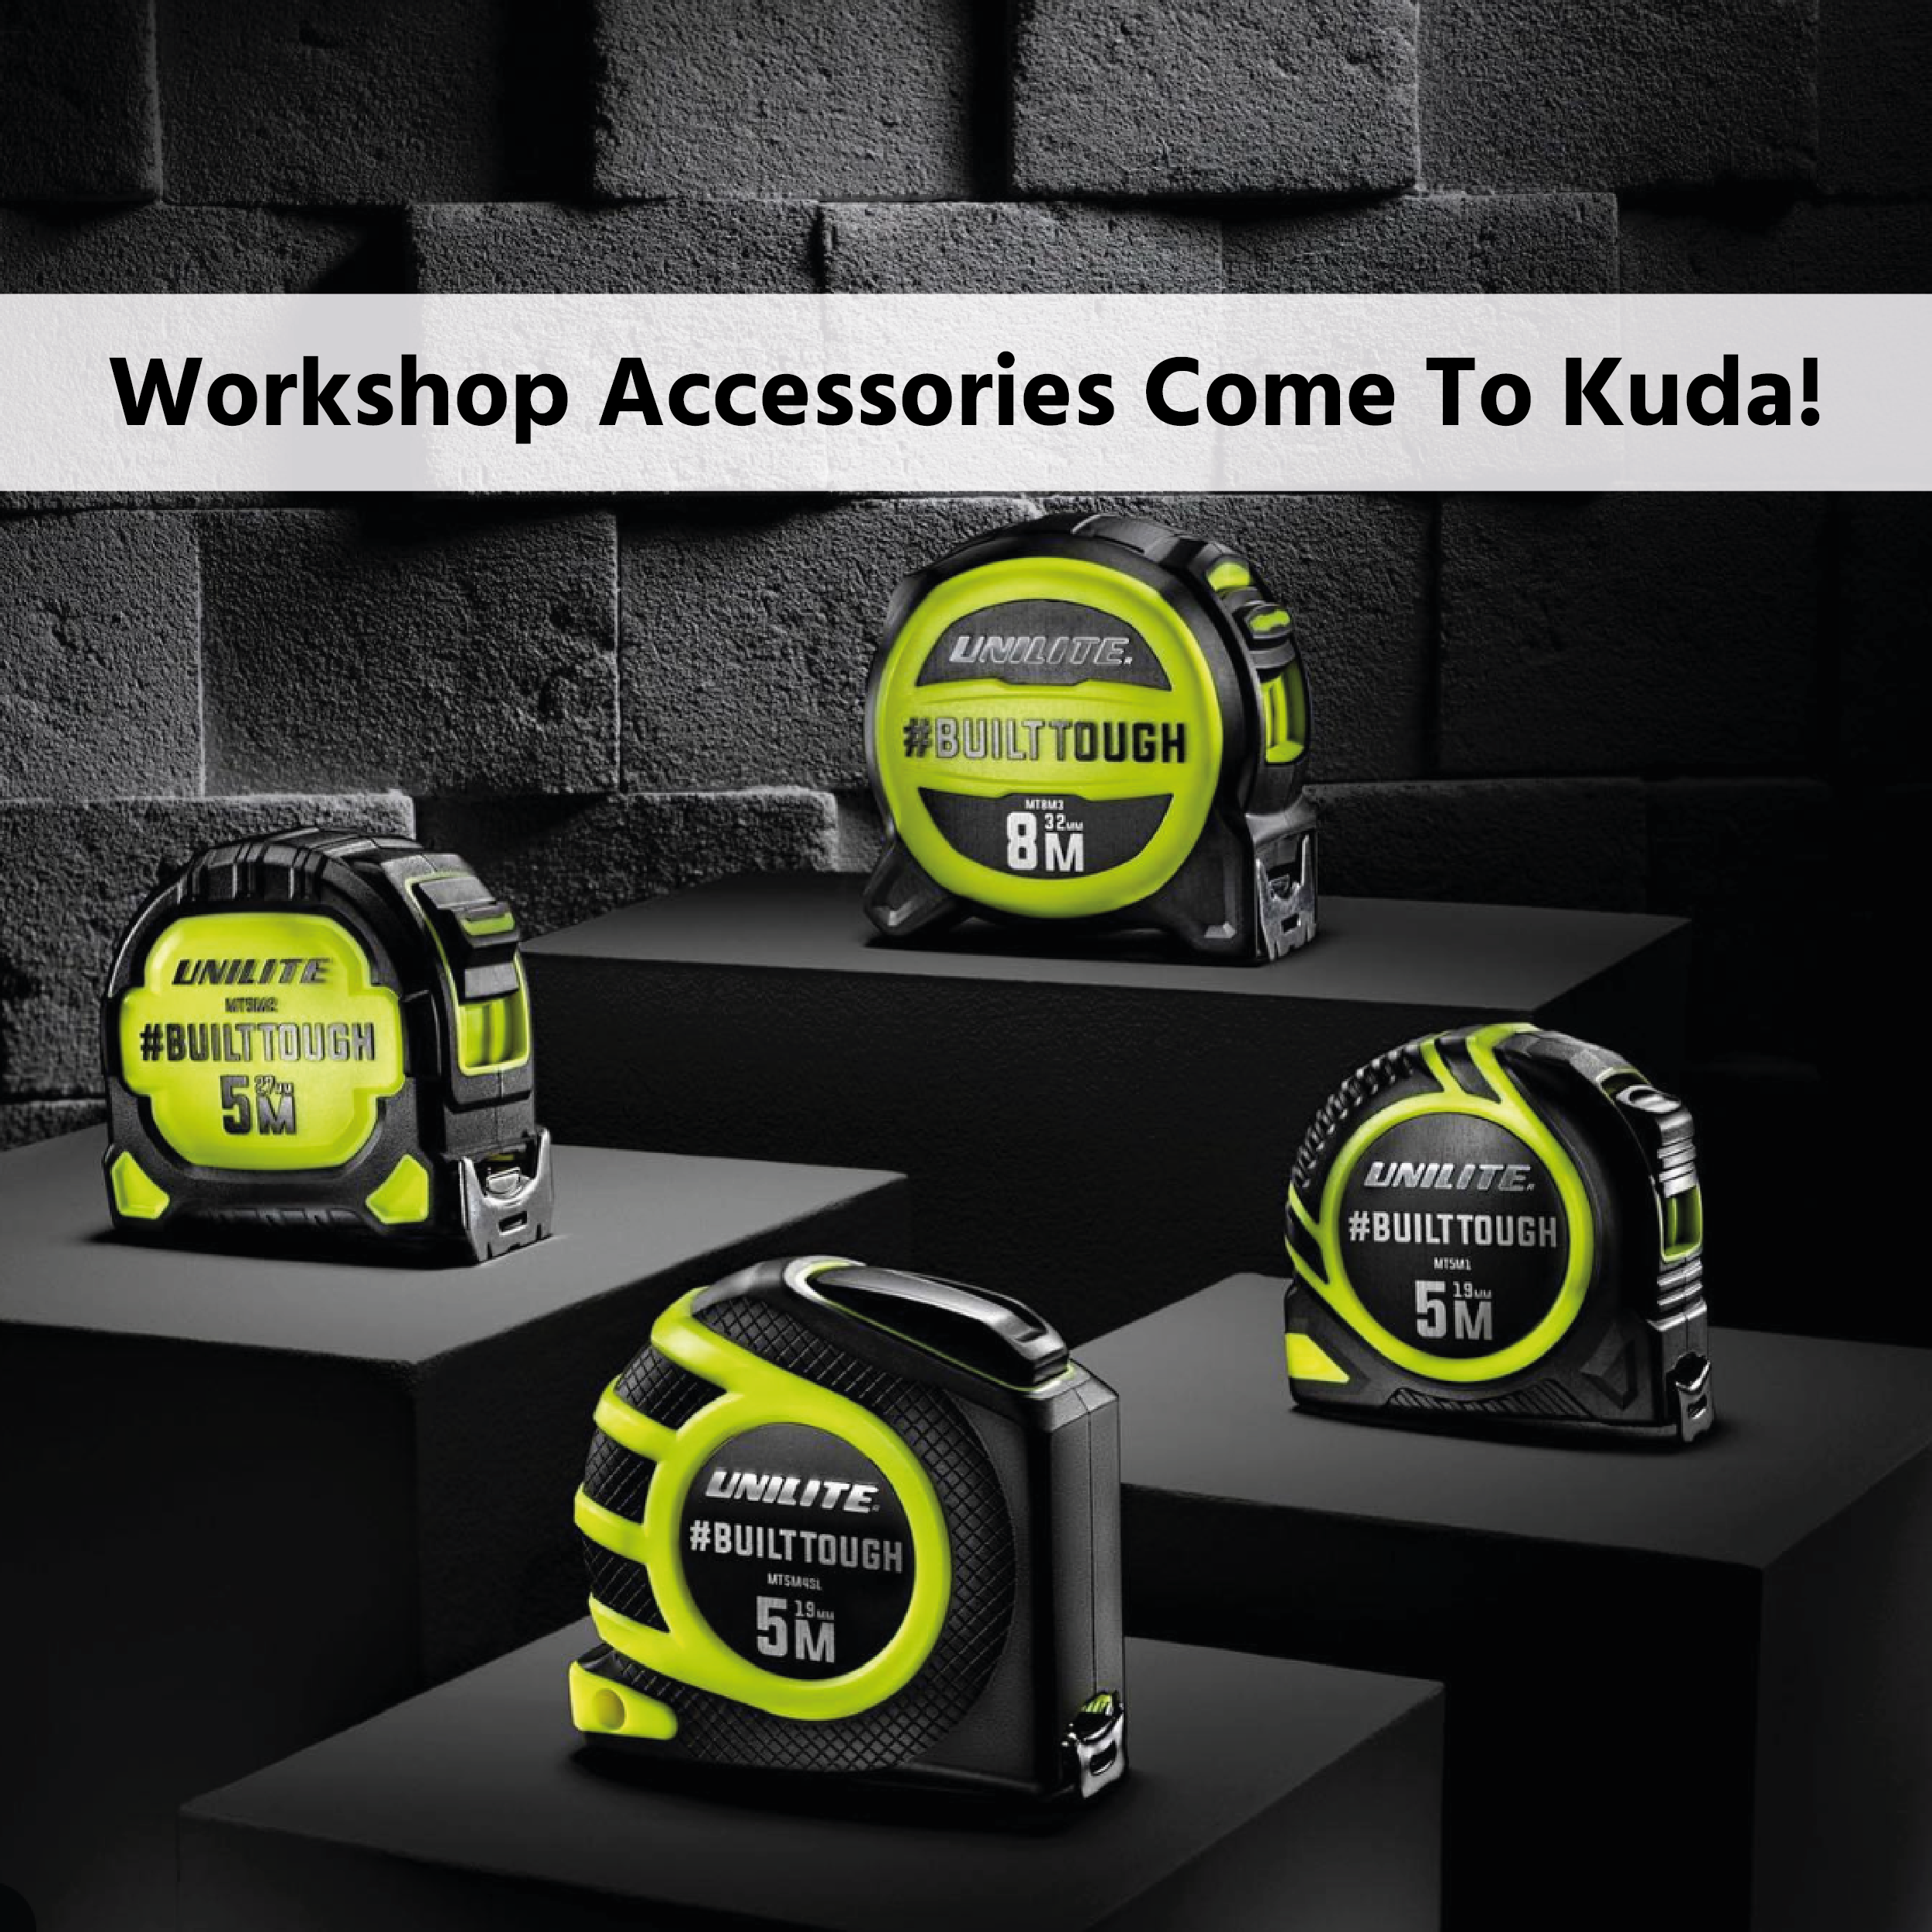 Workshop Accessories Come To Kuda!